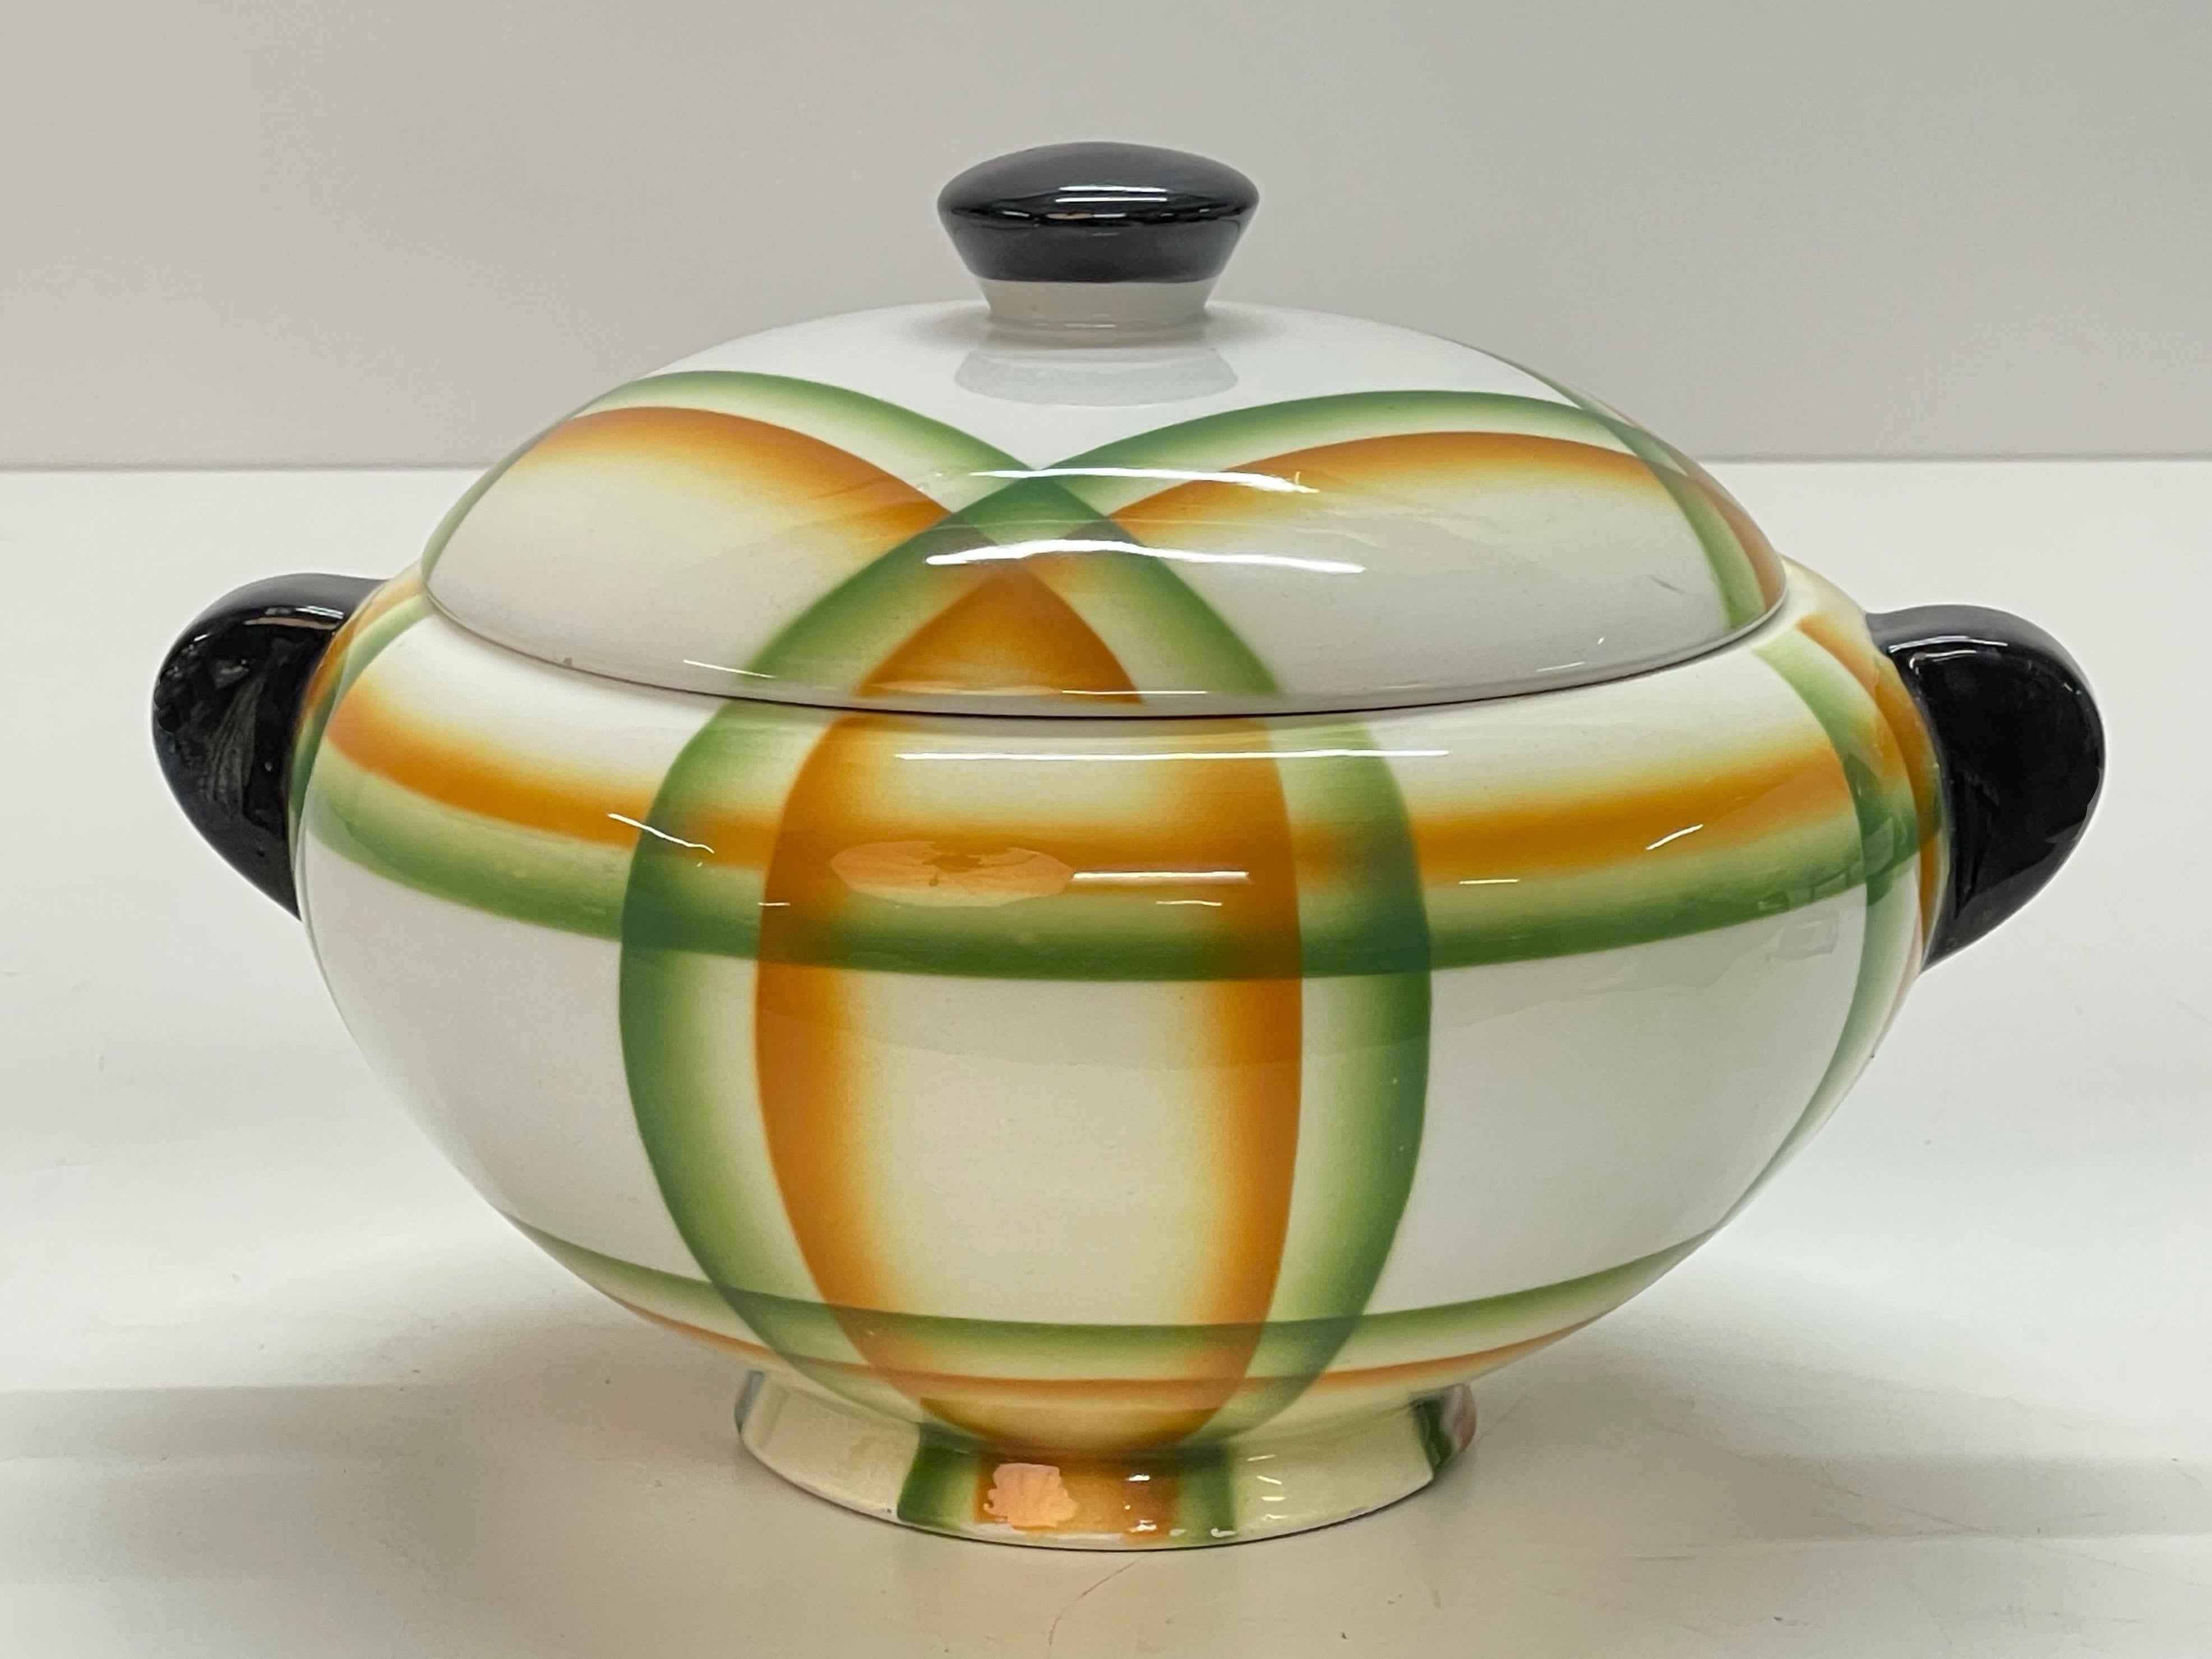 Simonetto Futuristic Airbrushed Ceramic Italian Centerpiece Soup Bowl, 1930s For Sale 1